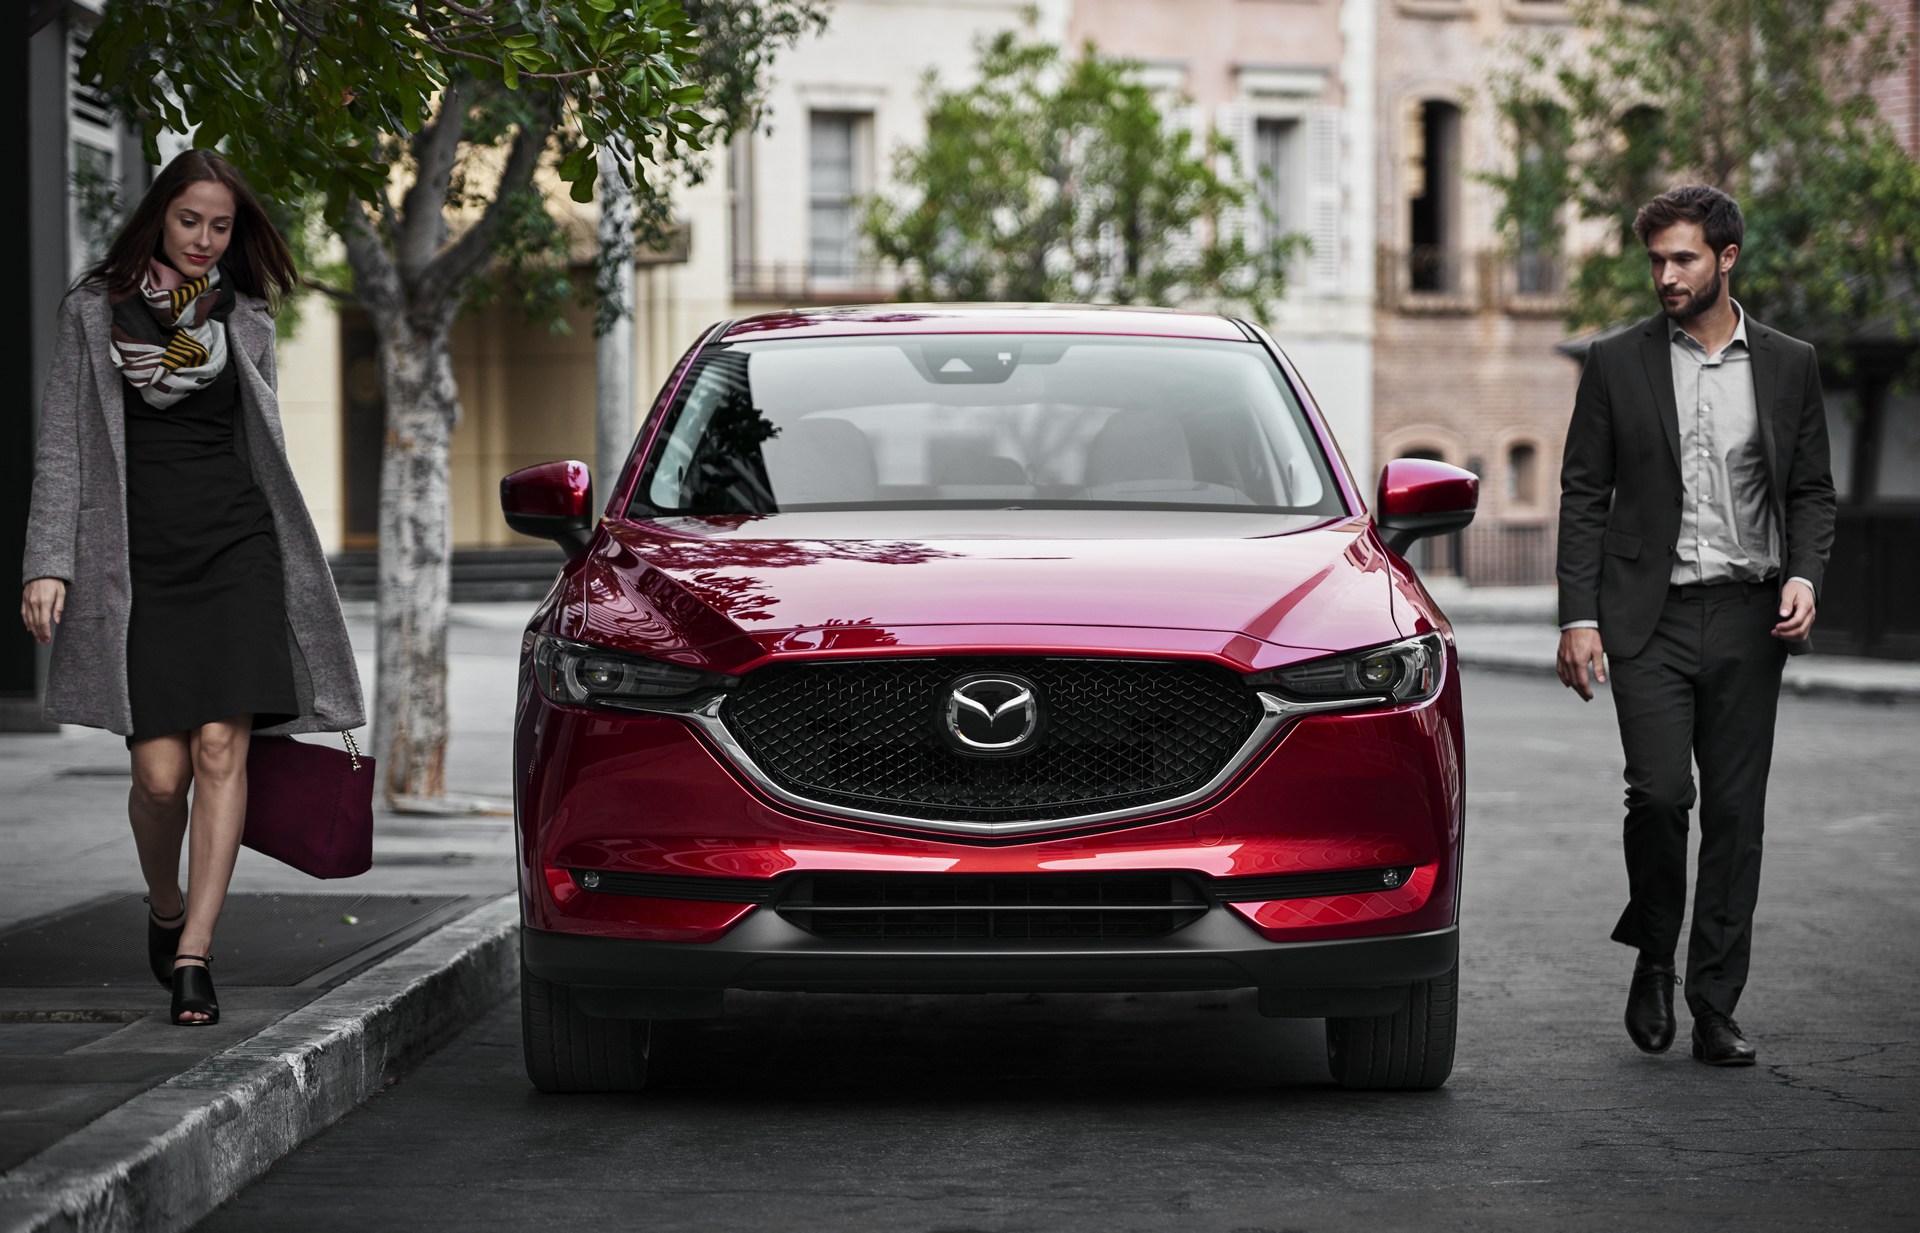 Mazda CX-5 lọt Top 3 tranh cử danh hiệu “Mẫu xe thế giới 2018”